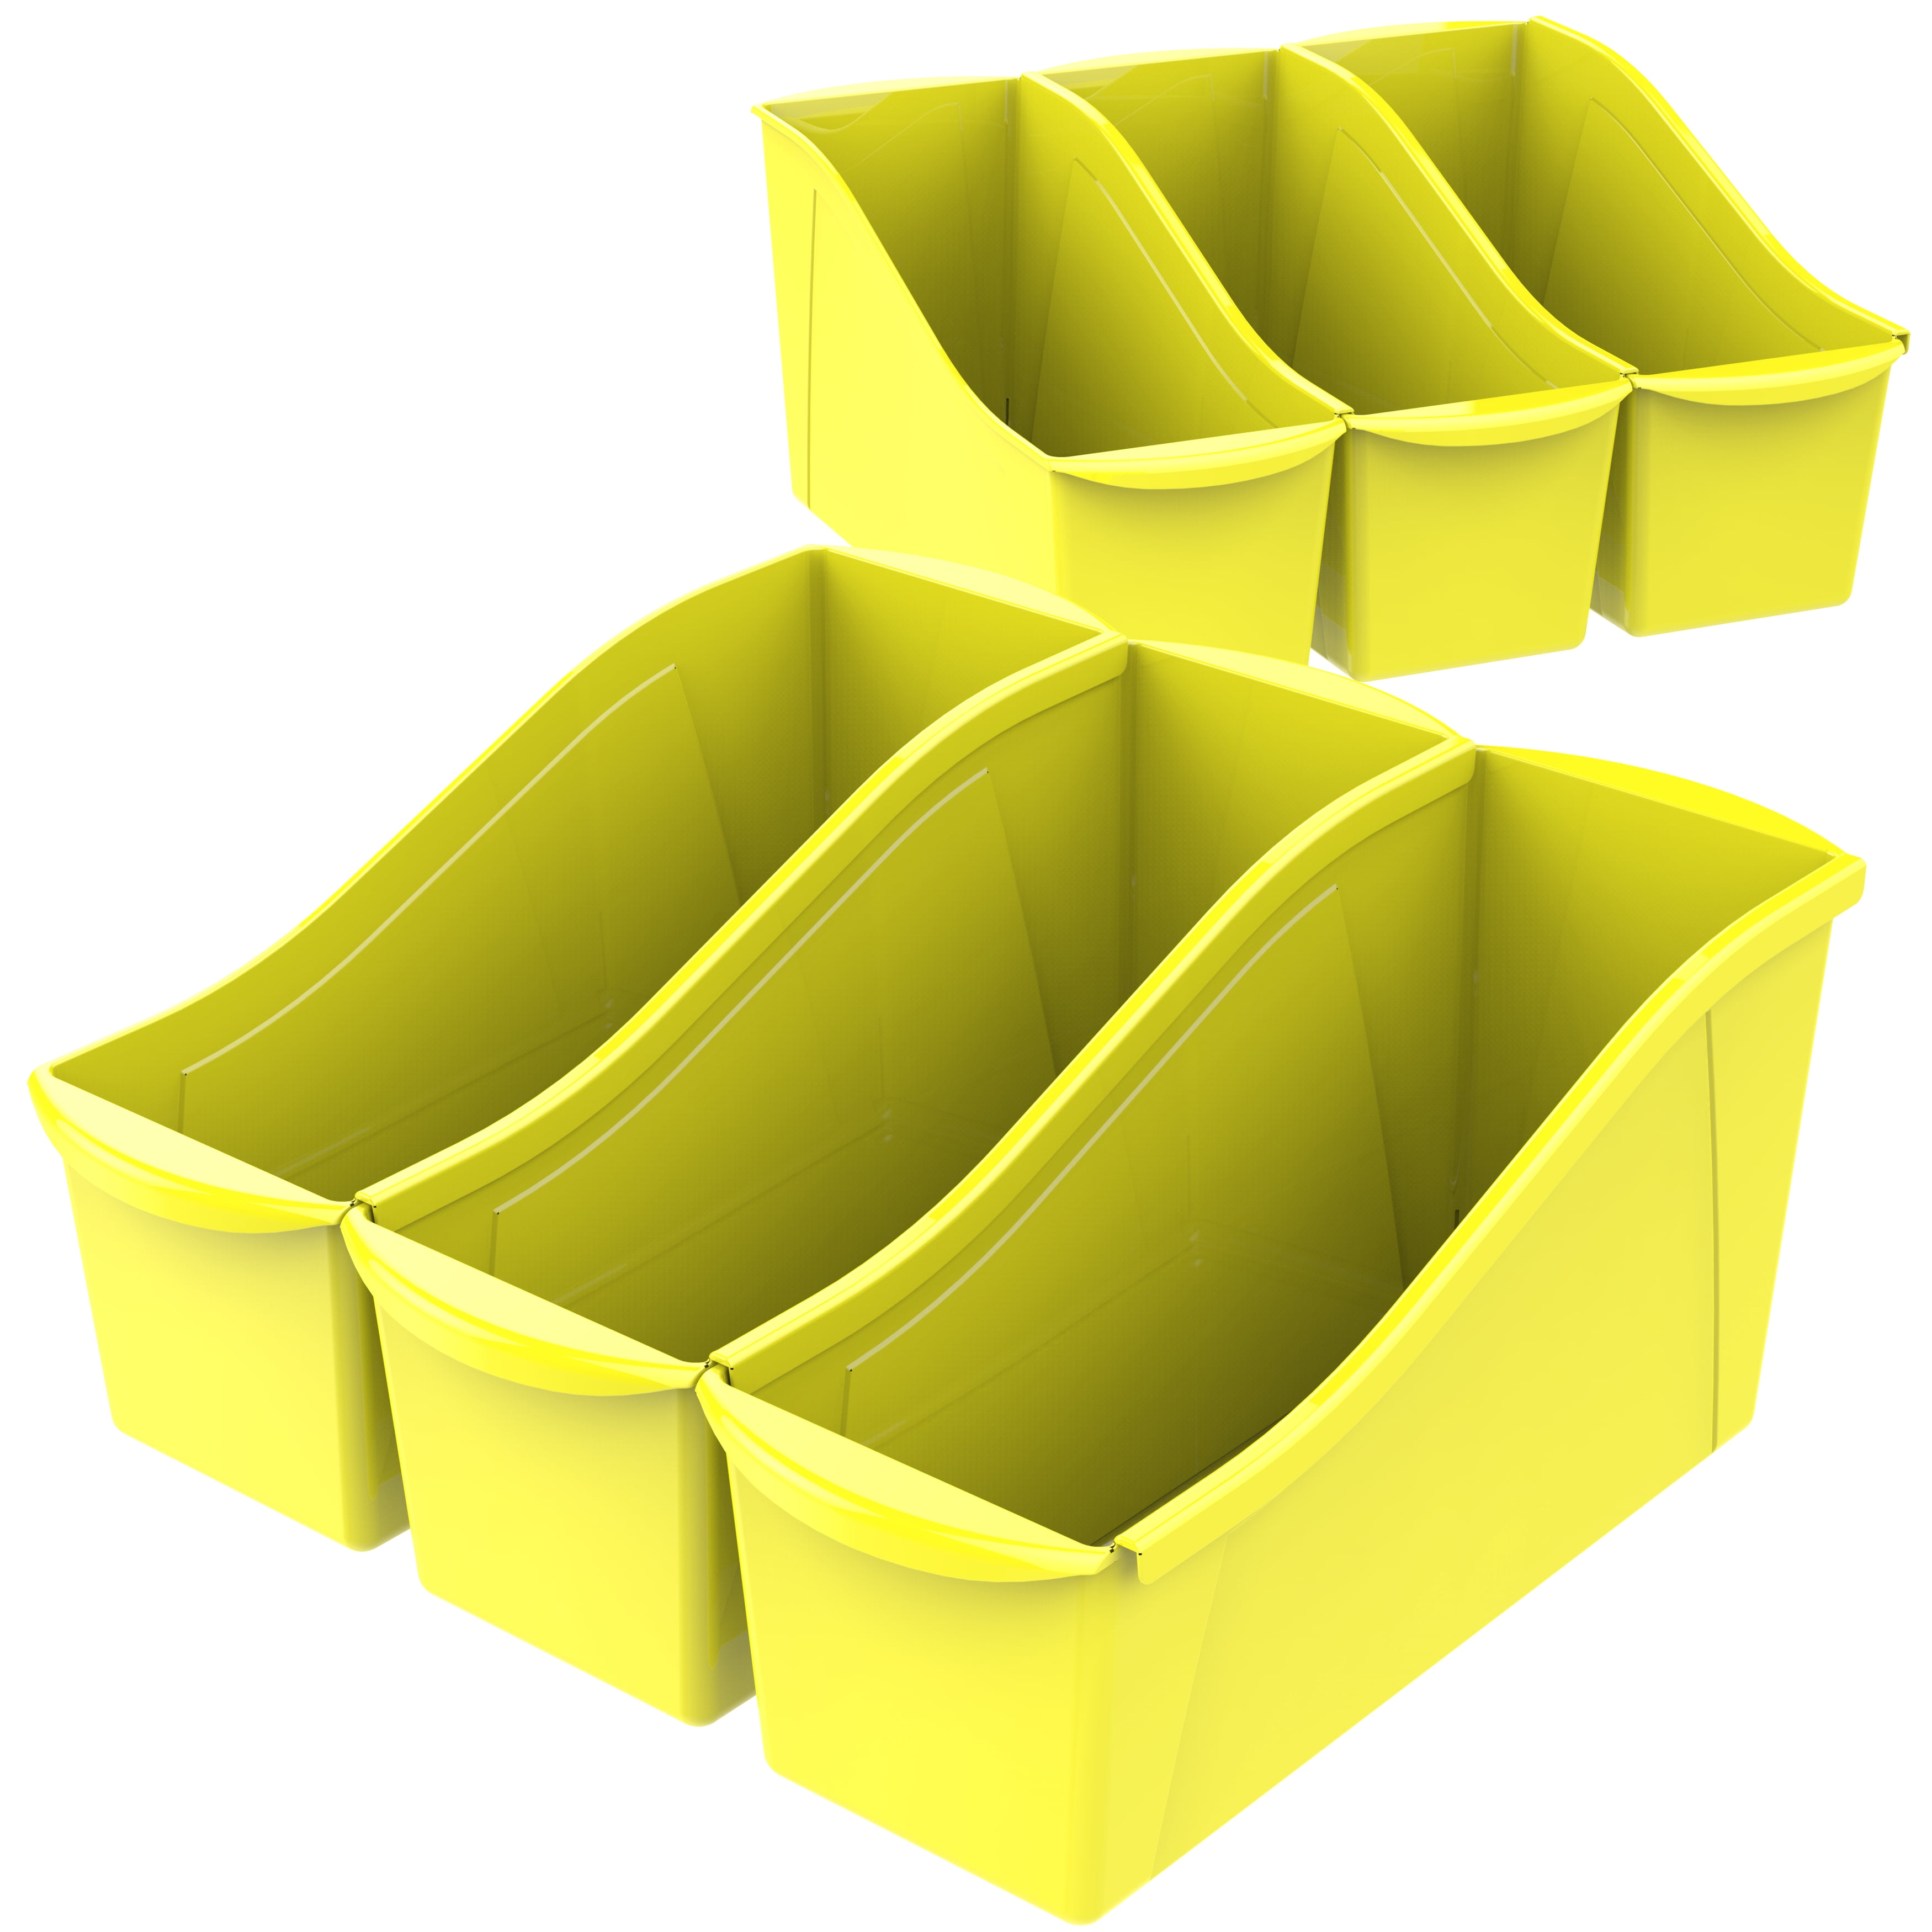 Storex Large Plastic Book Bin Kids Paper Storage Yellow 6 Pack